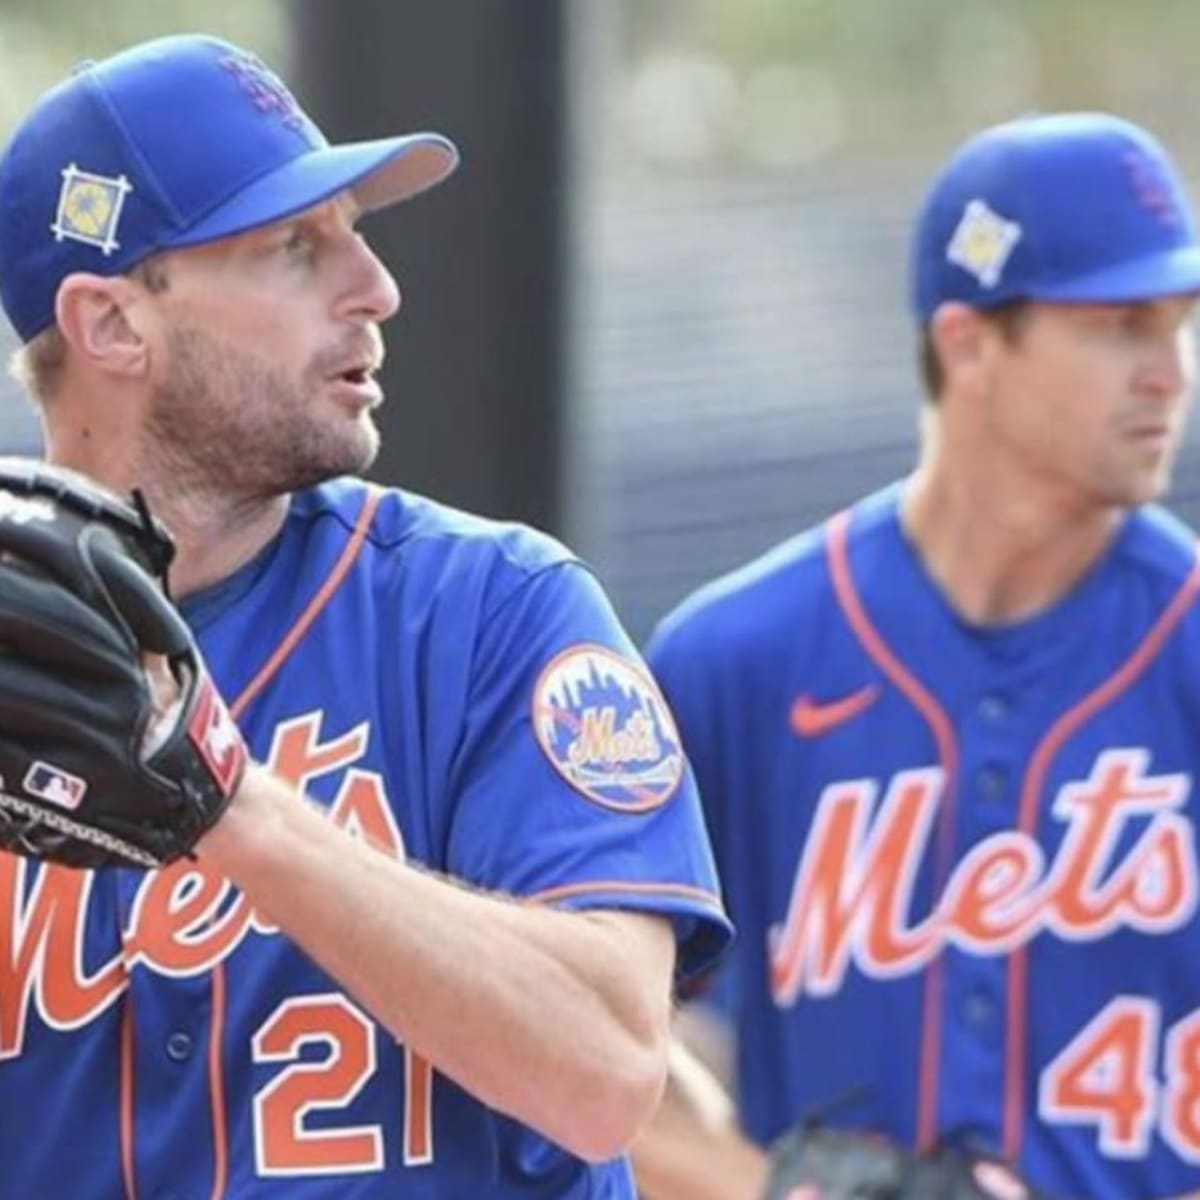 Mets injury update: Max Scherzer diagnosed with oblique strain